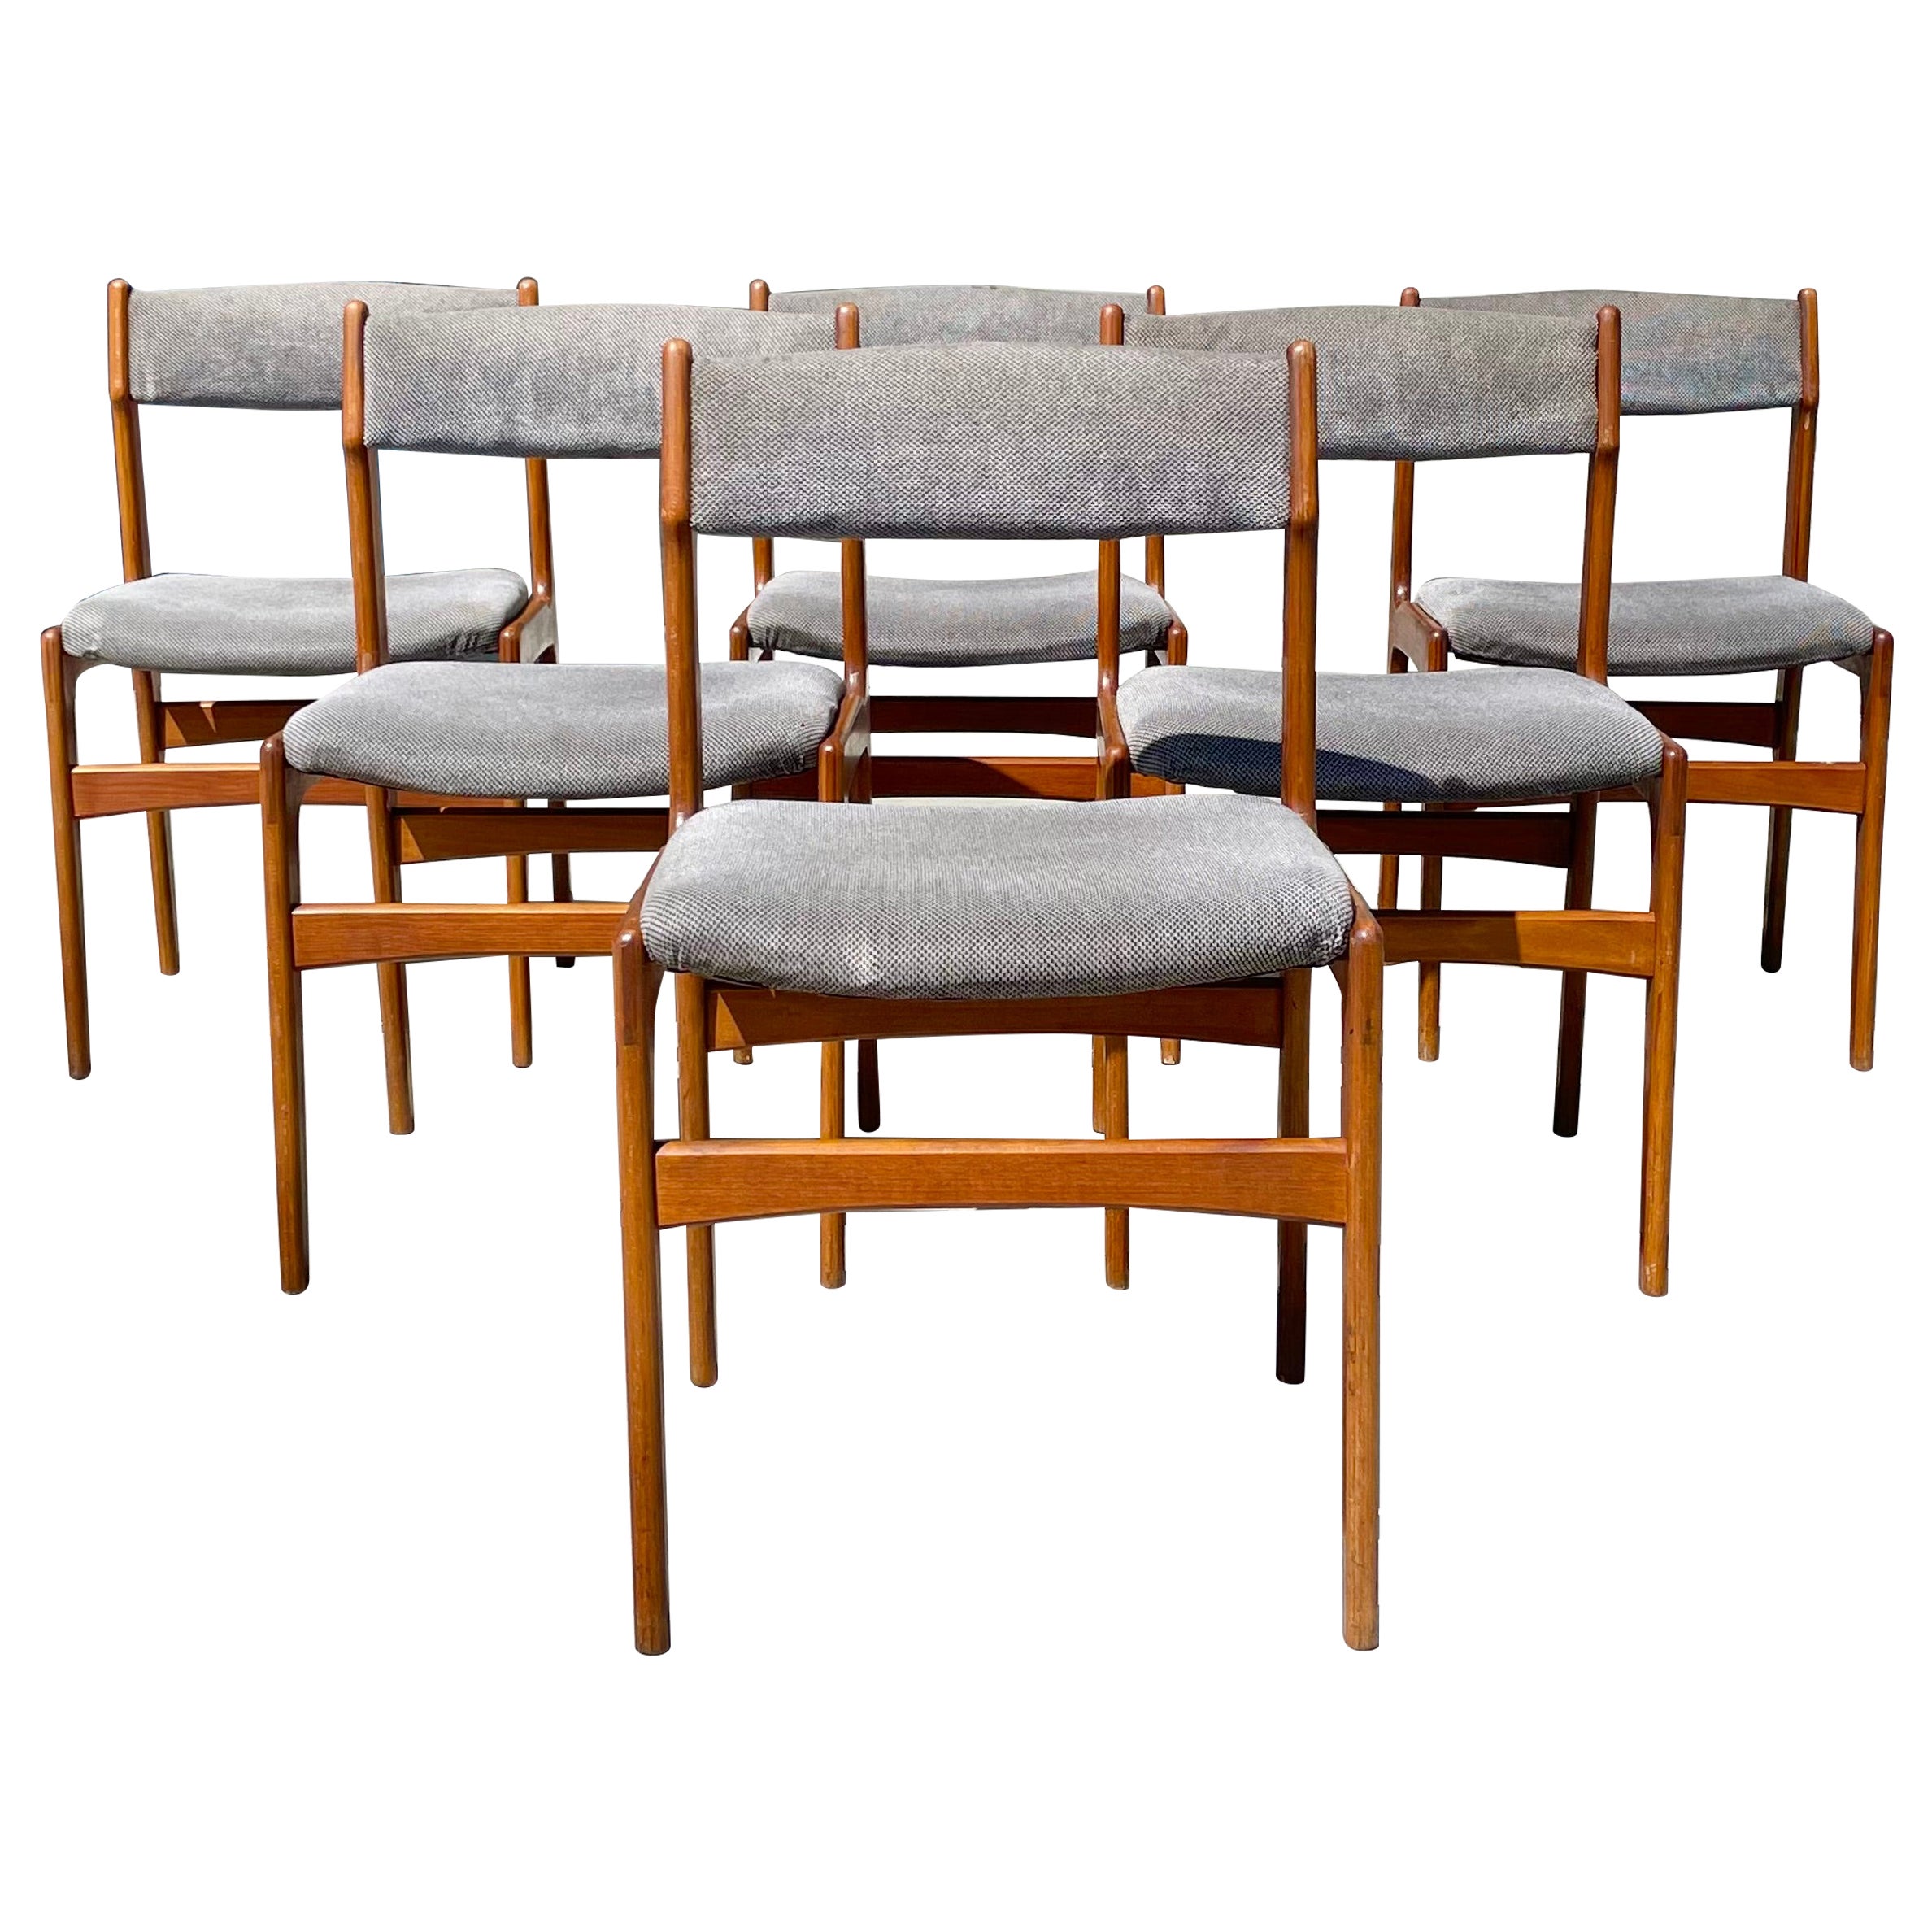 1960s Danish Modern Teak Dining Chairs - Set of 6 (Chaises de salle à manger danoises modernes en teck)